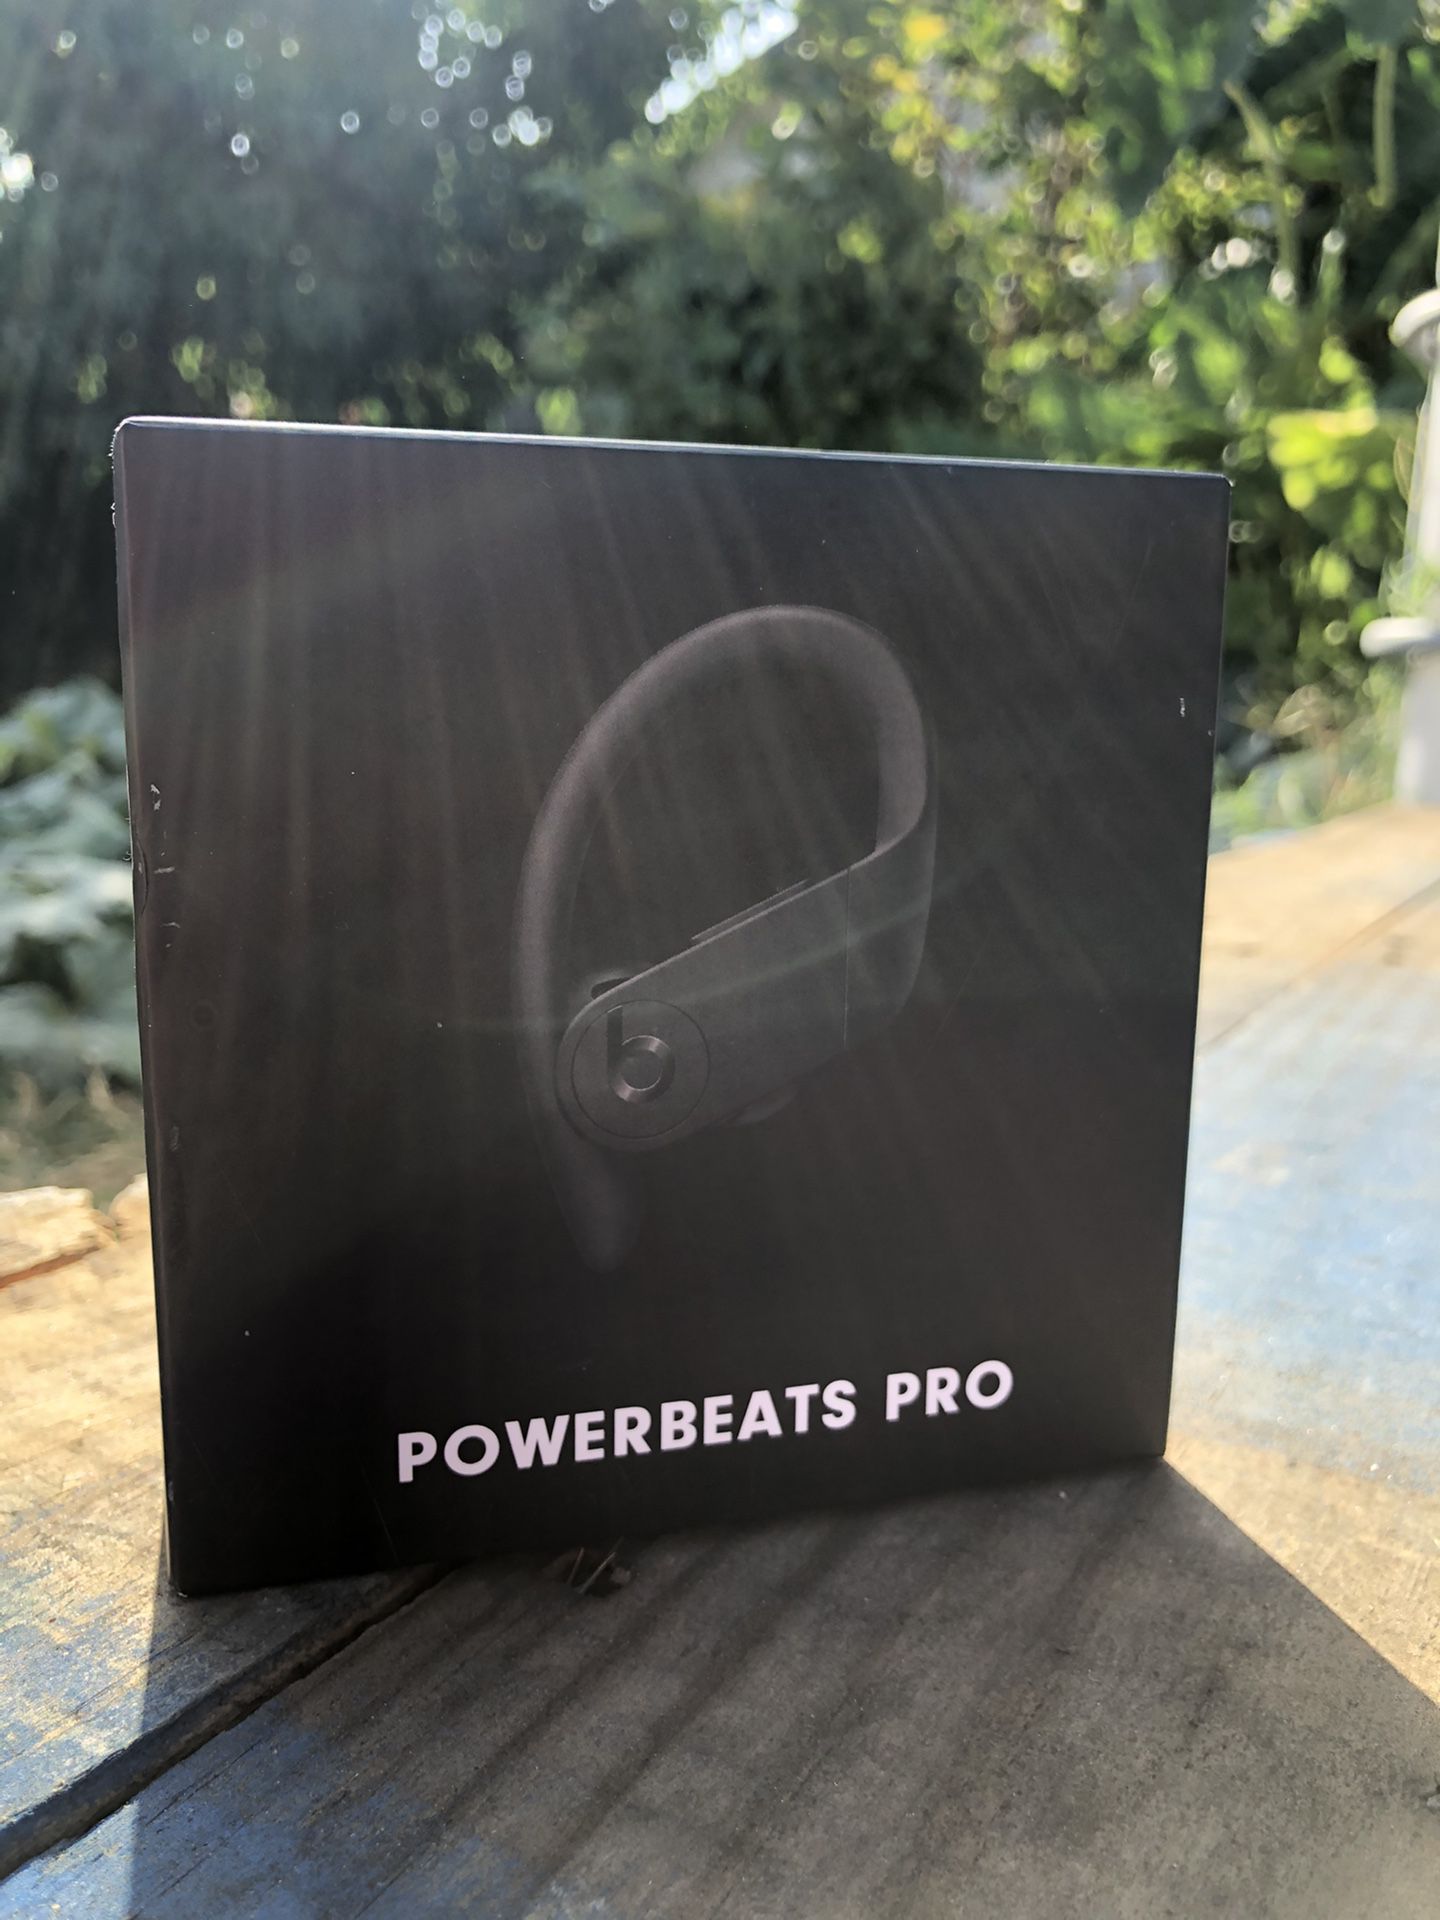 2019 Latest POWERBEATS PRO Apple Totally Wireless Earphones Beats By Dre - Black AUTHENTIC